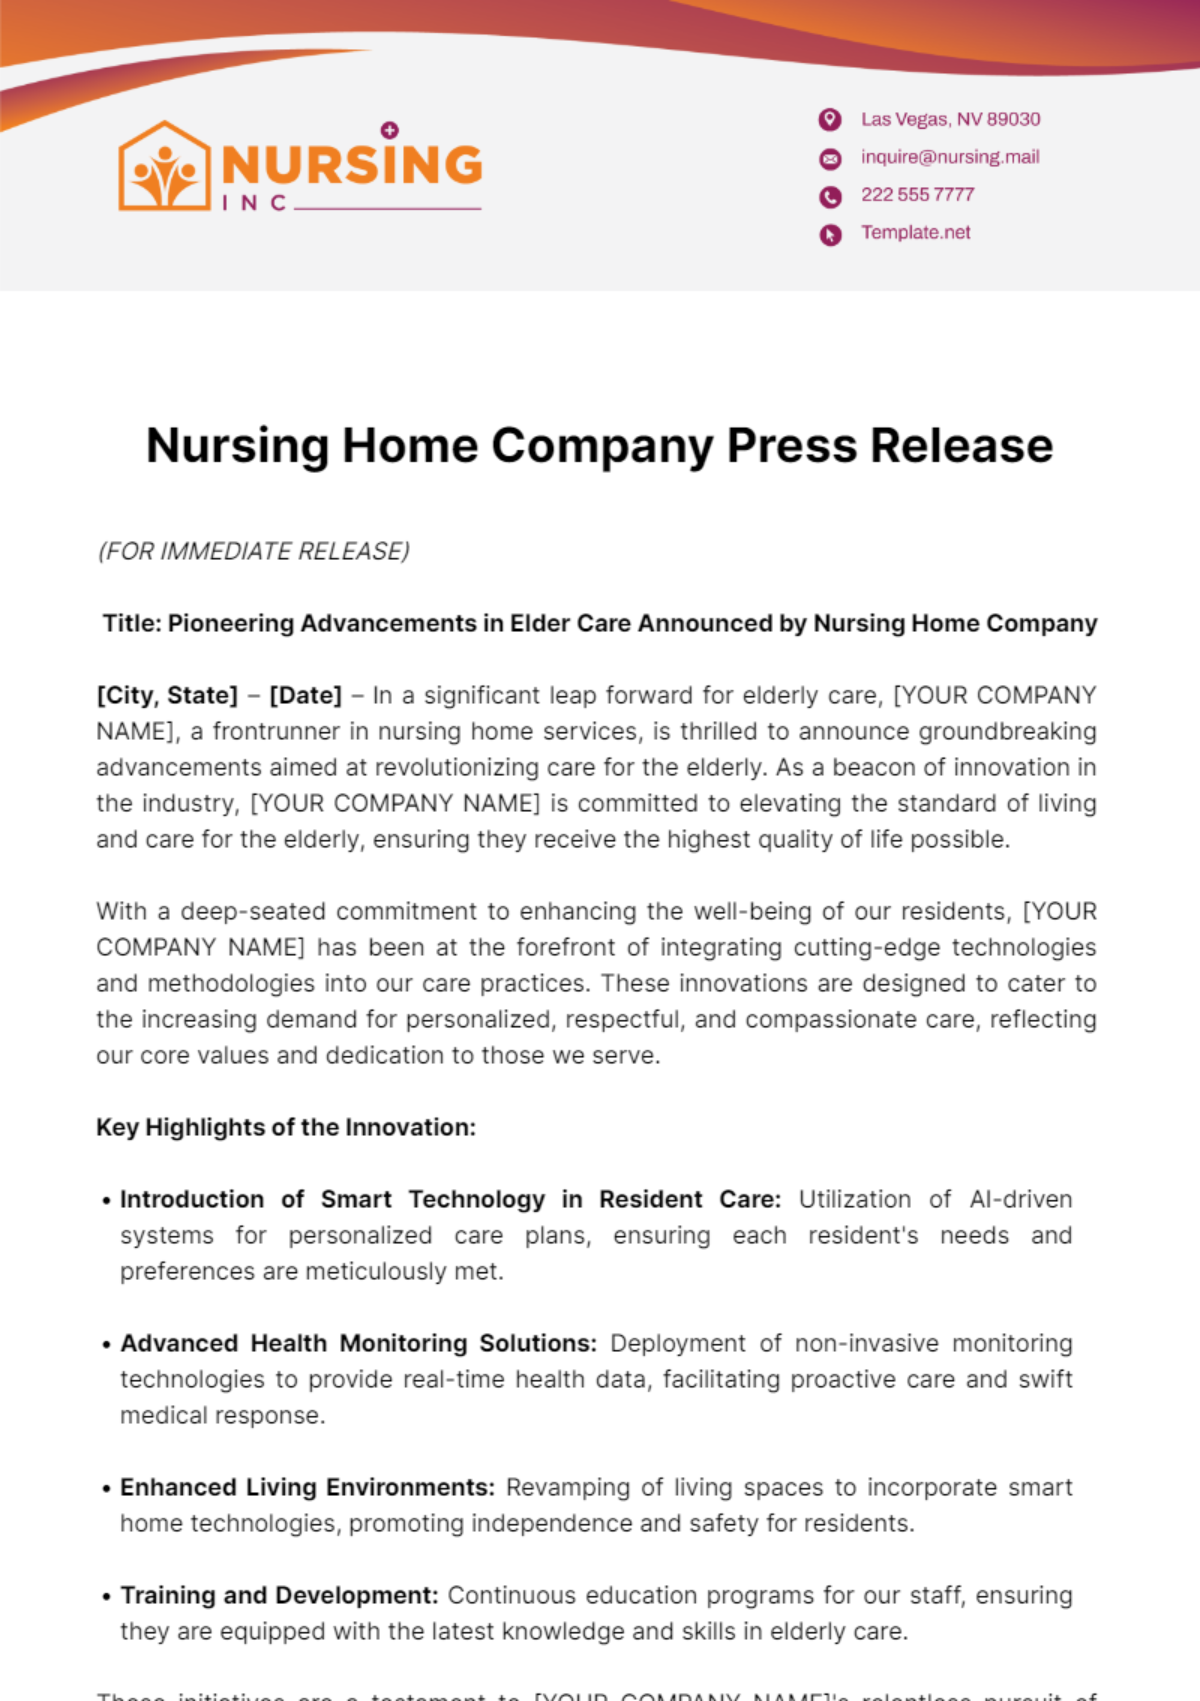 Free Nursing Home Company Press Release Template